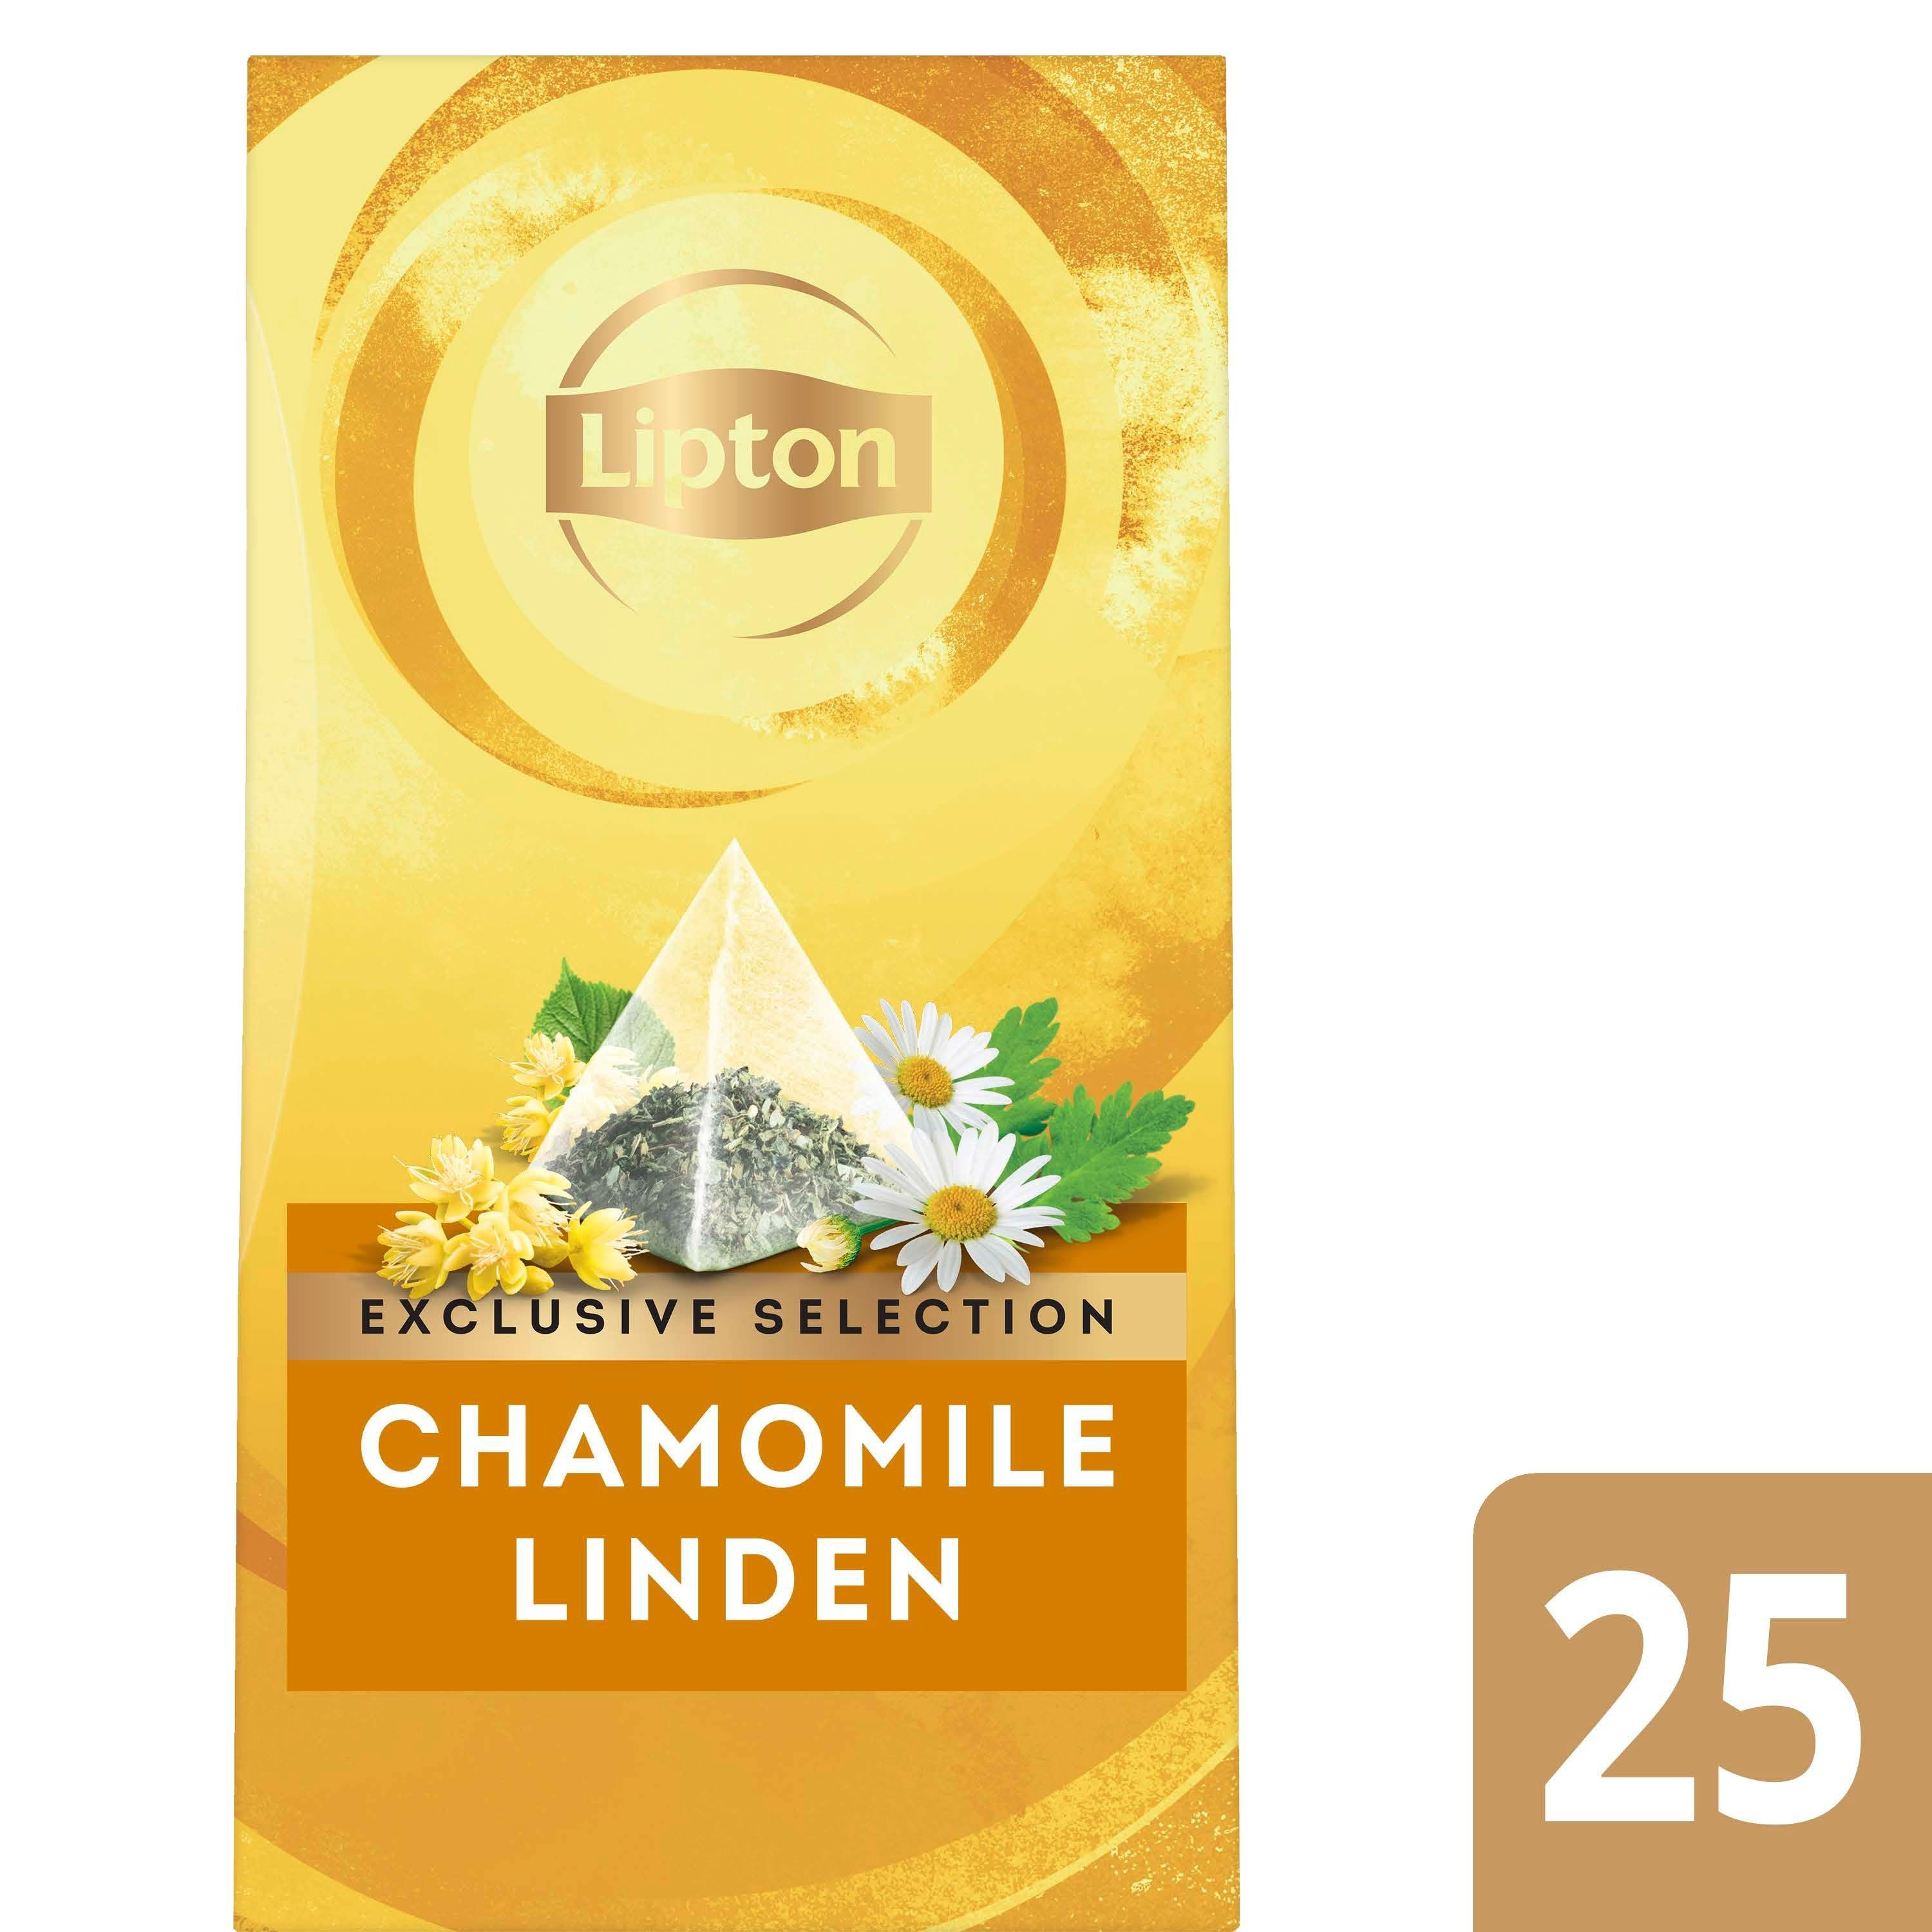 Lipton Thè Camomile Tilleul EXCLUSIVE SELECTION 25pc